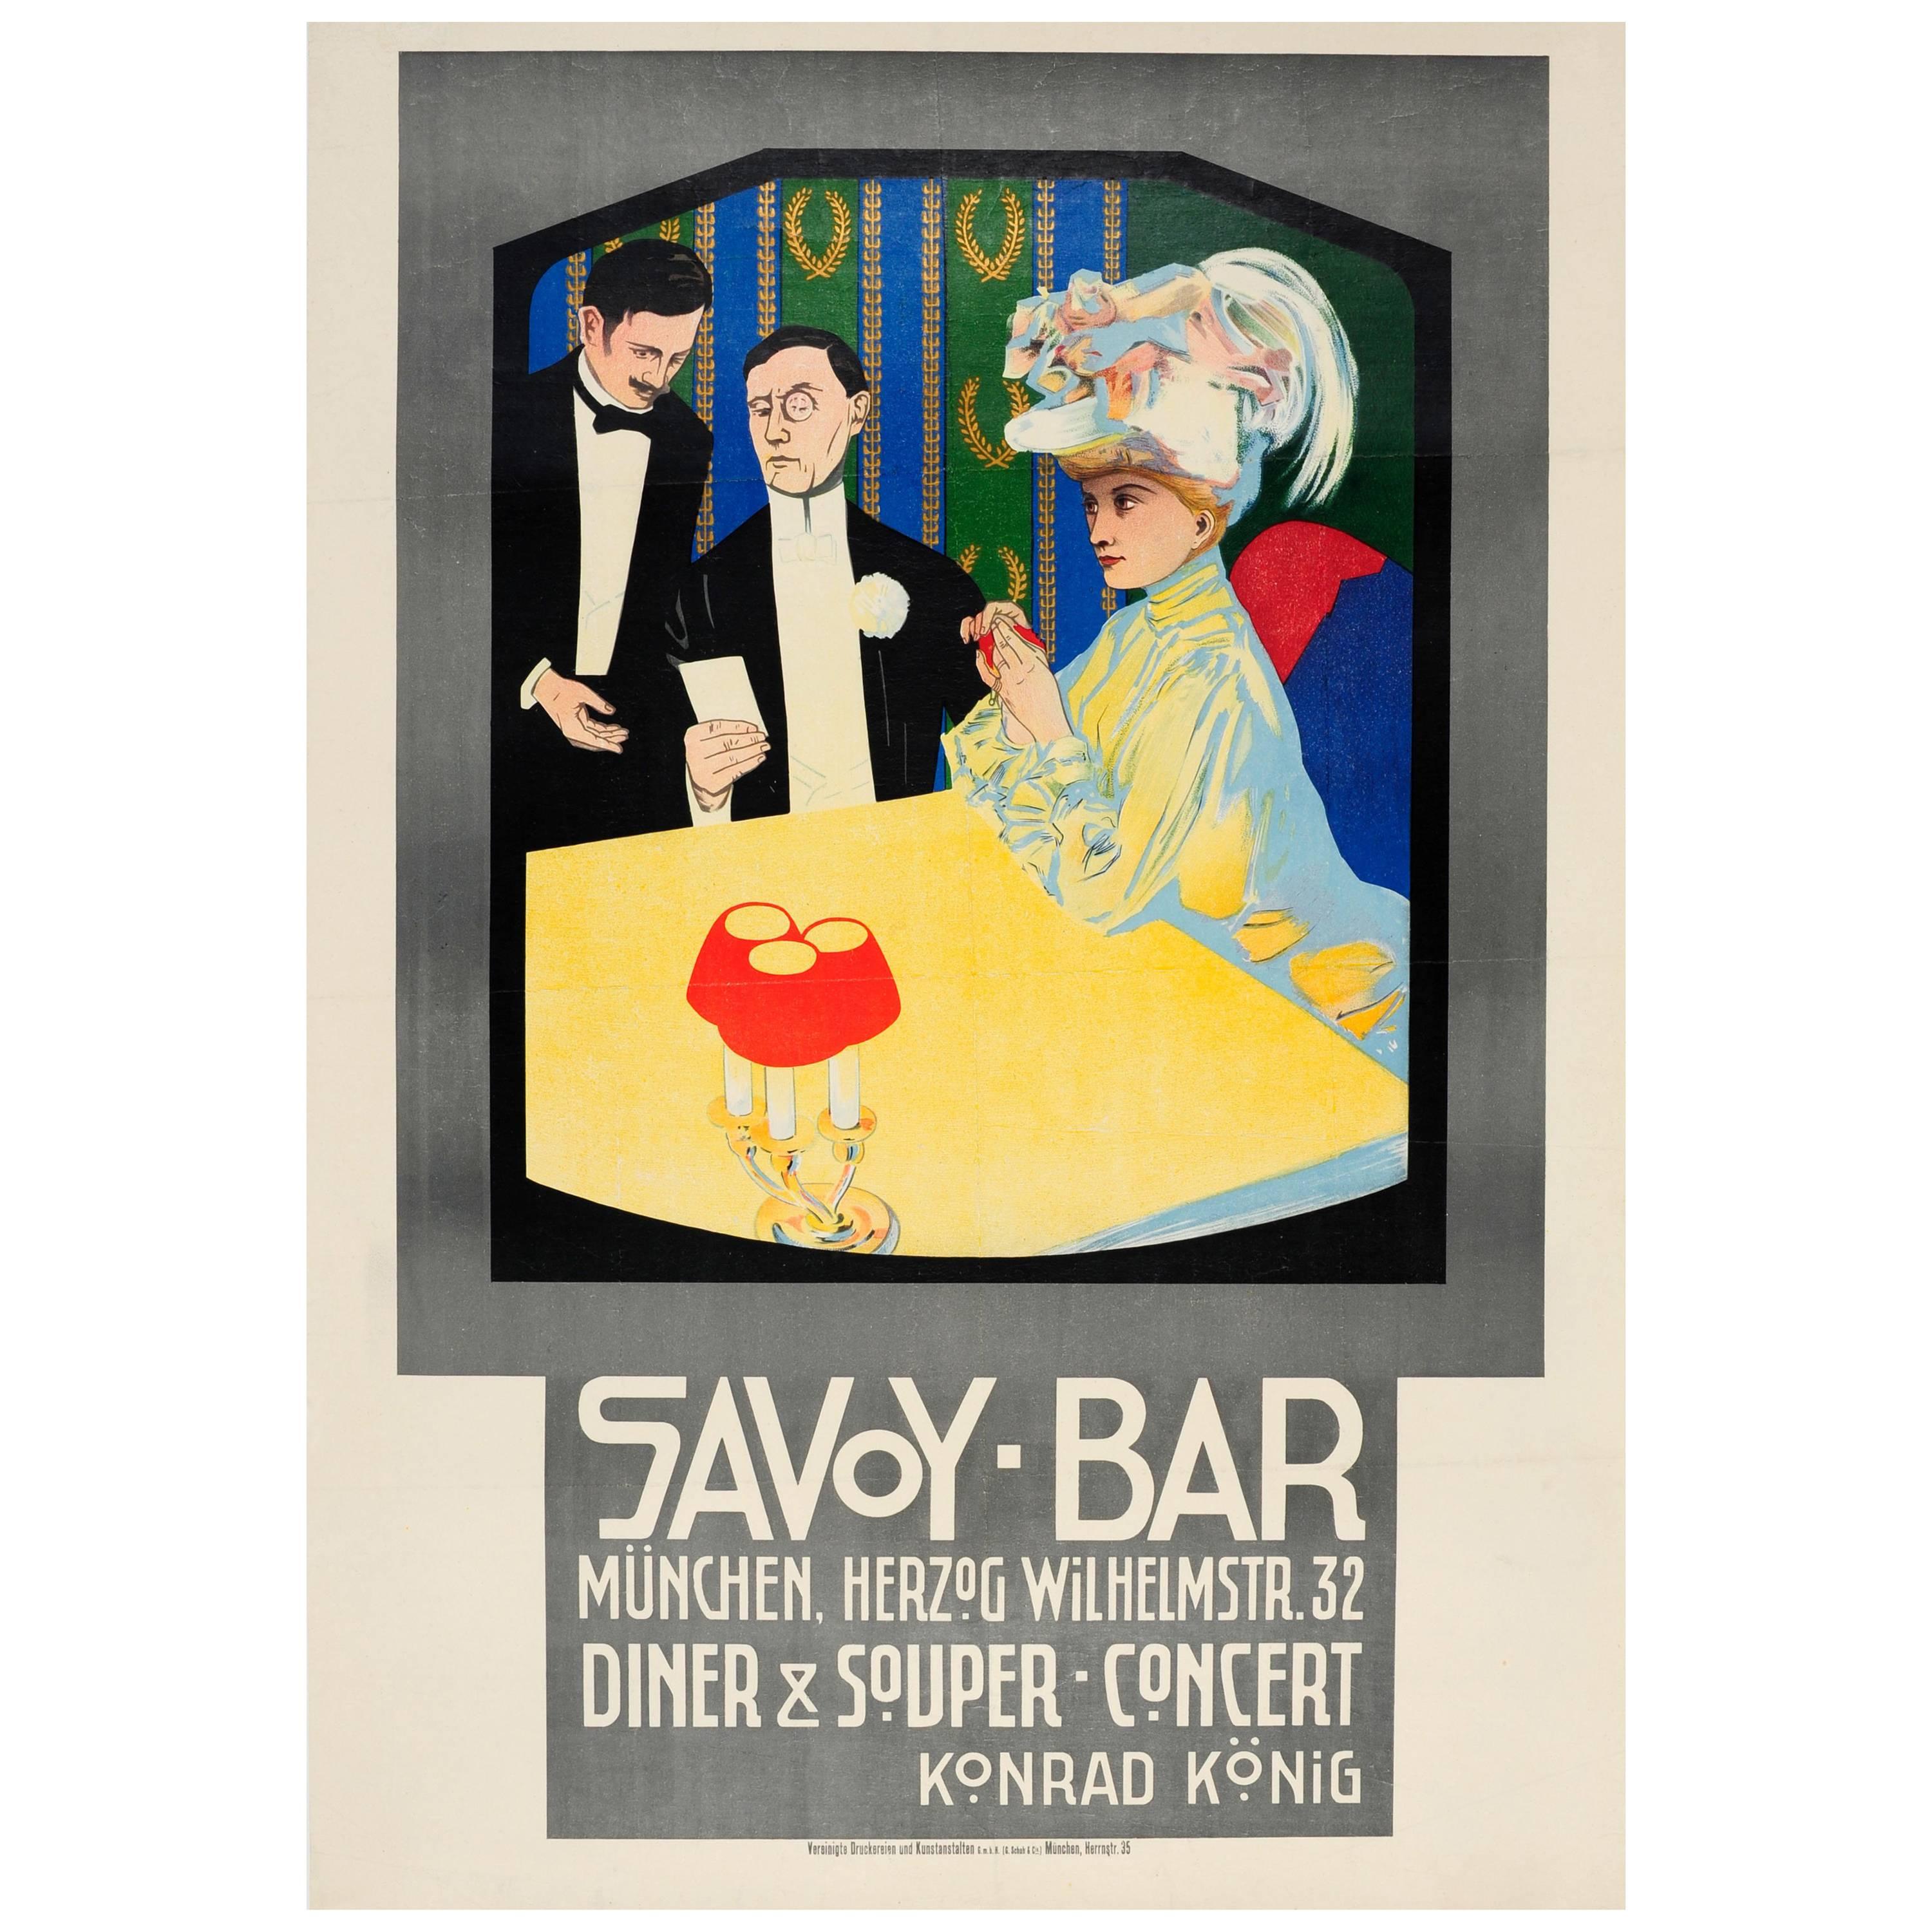 Original Antique Poster for a Dinner Concert at the Savoy Bar Munchen / Munich For Sale